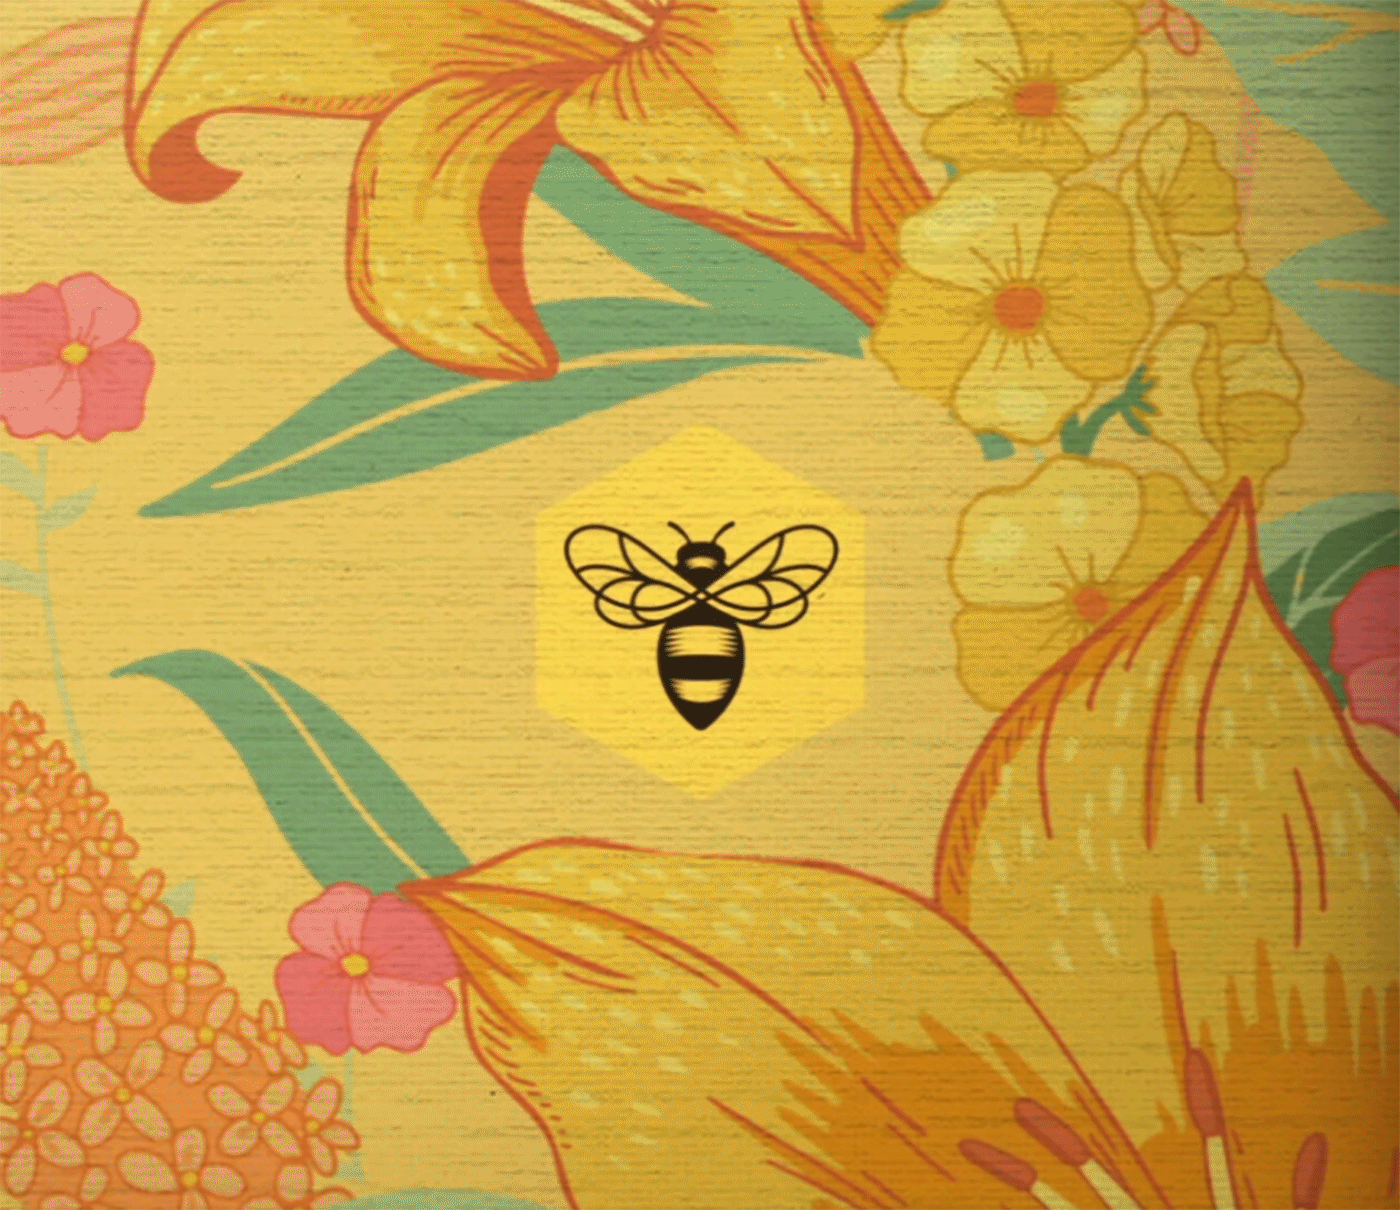 burt's bees commercial art floral Flowers ILLUSTRATION  Mural nature inspired Patterns plants wallpaper